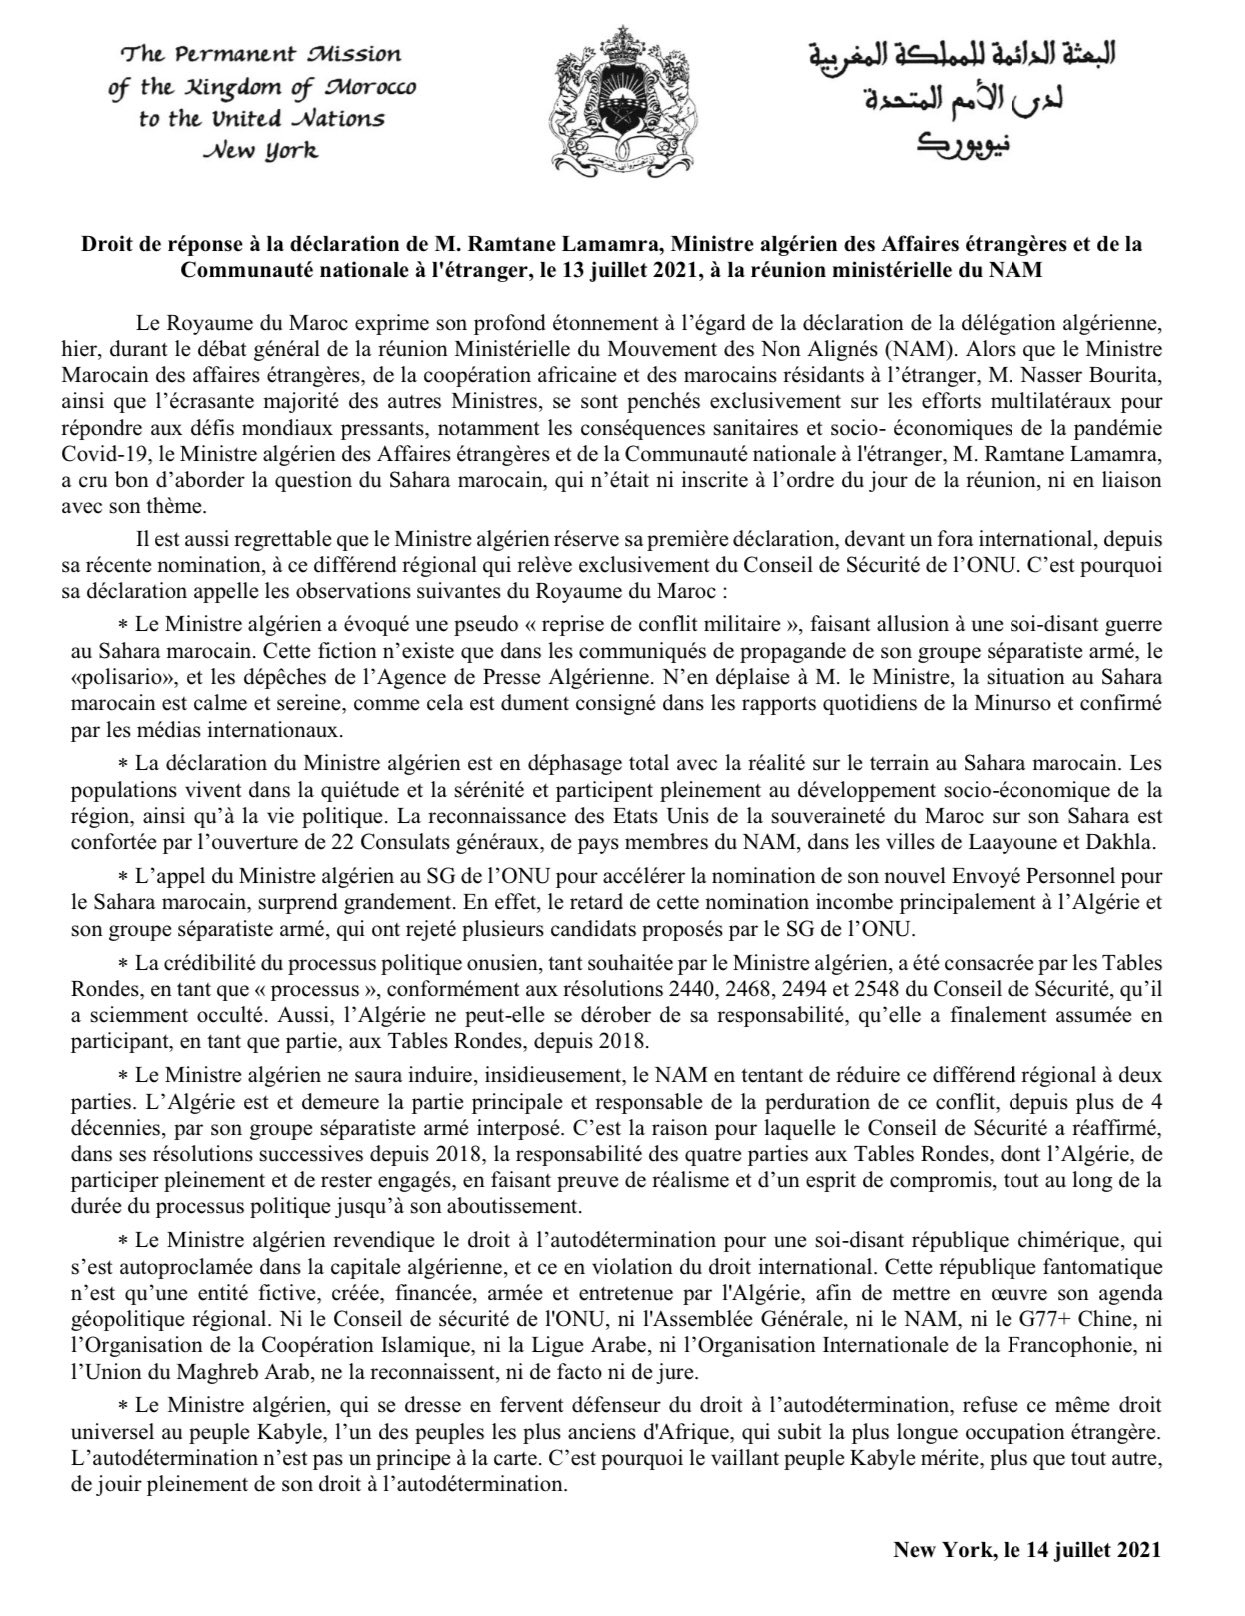 Diplomatie marocaine - Relations internationales - Page 39 20210712